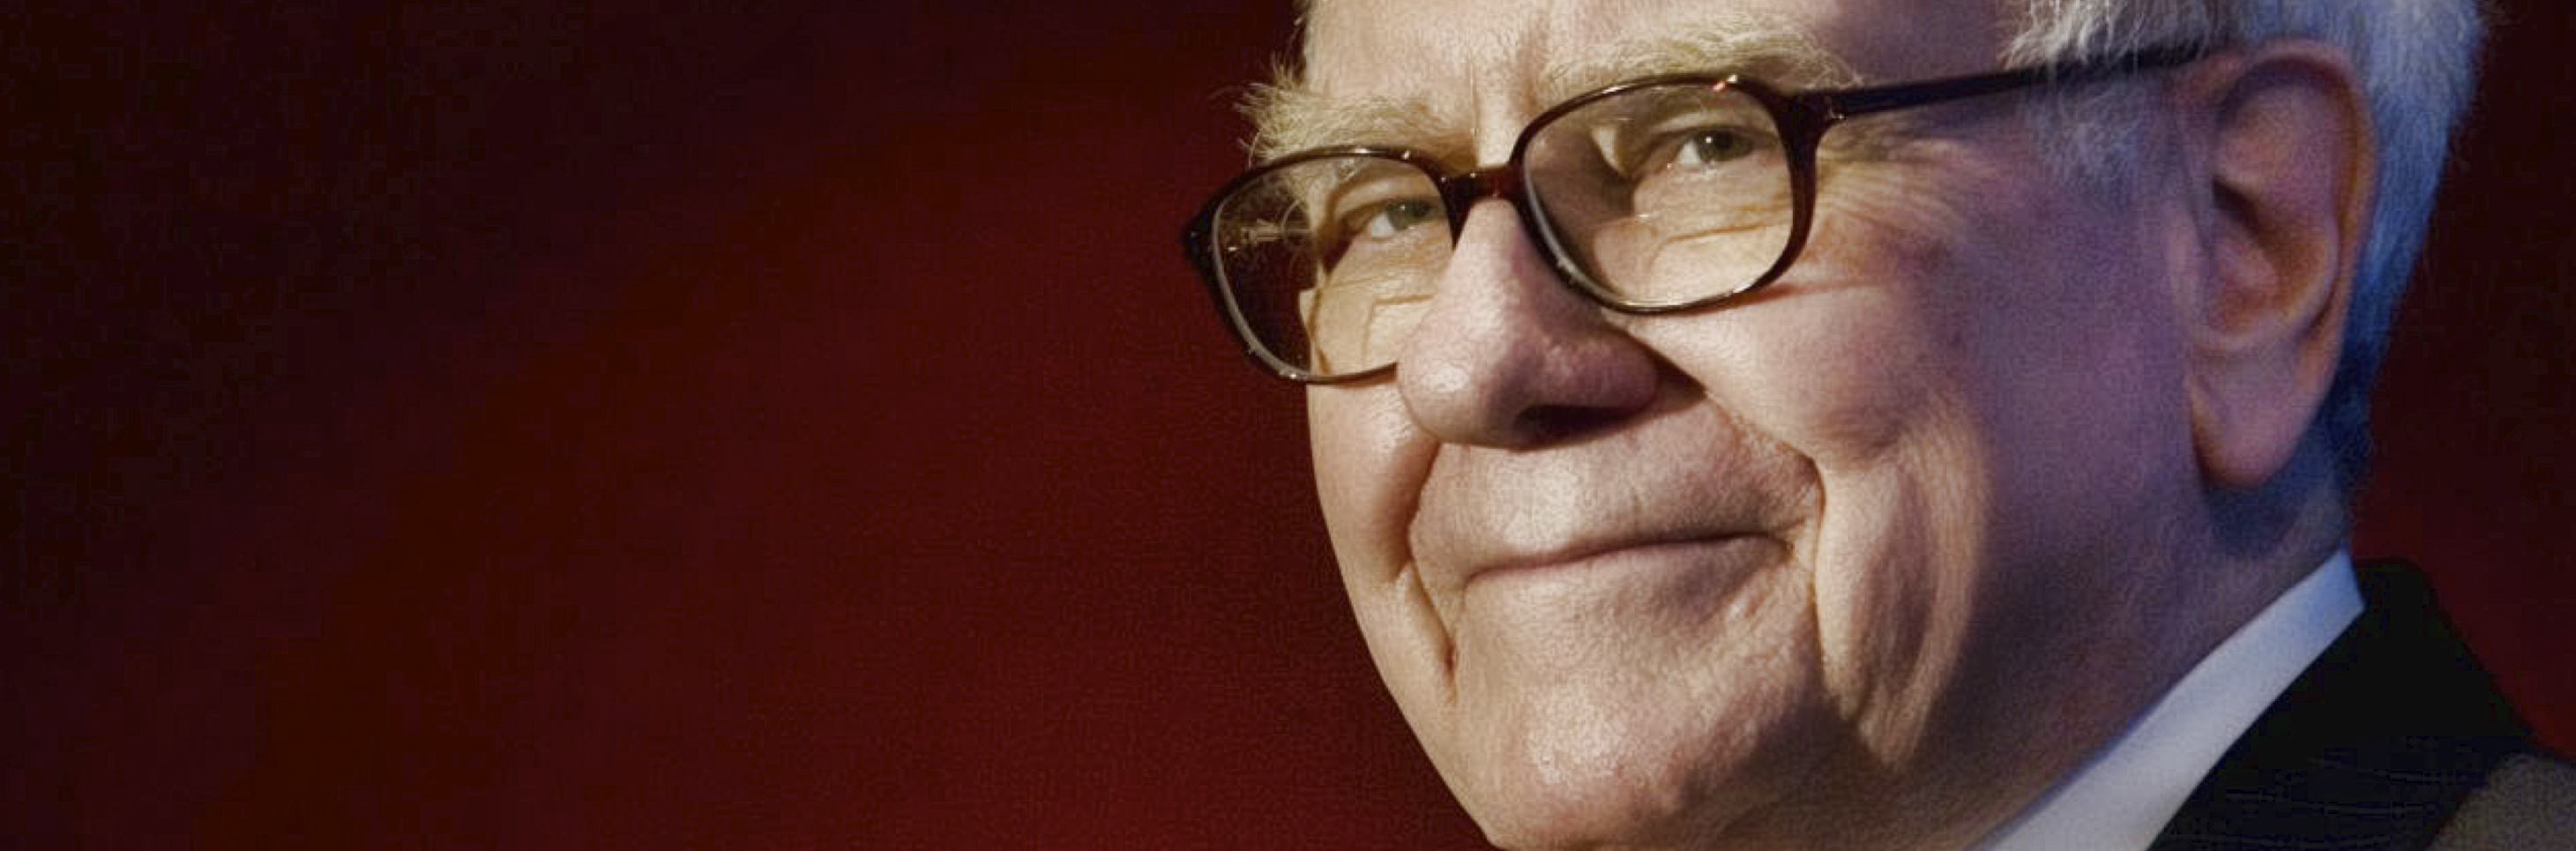 Buffett at 90: Three Traits Help Define His Success